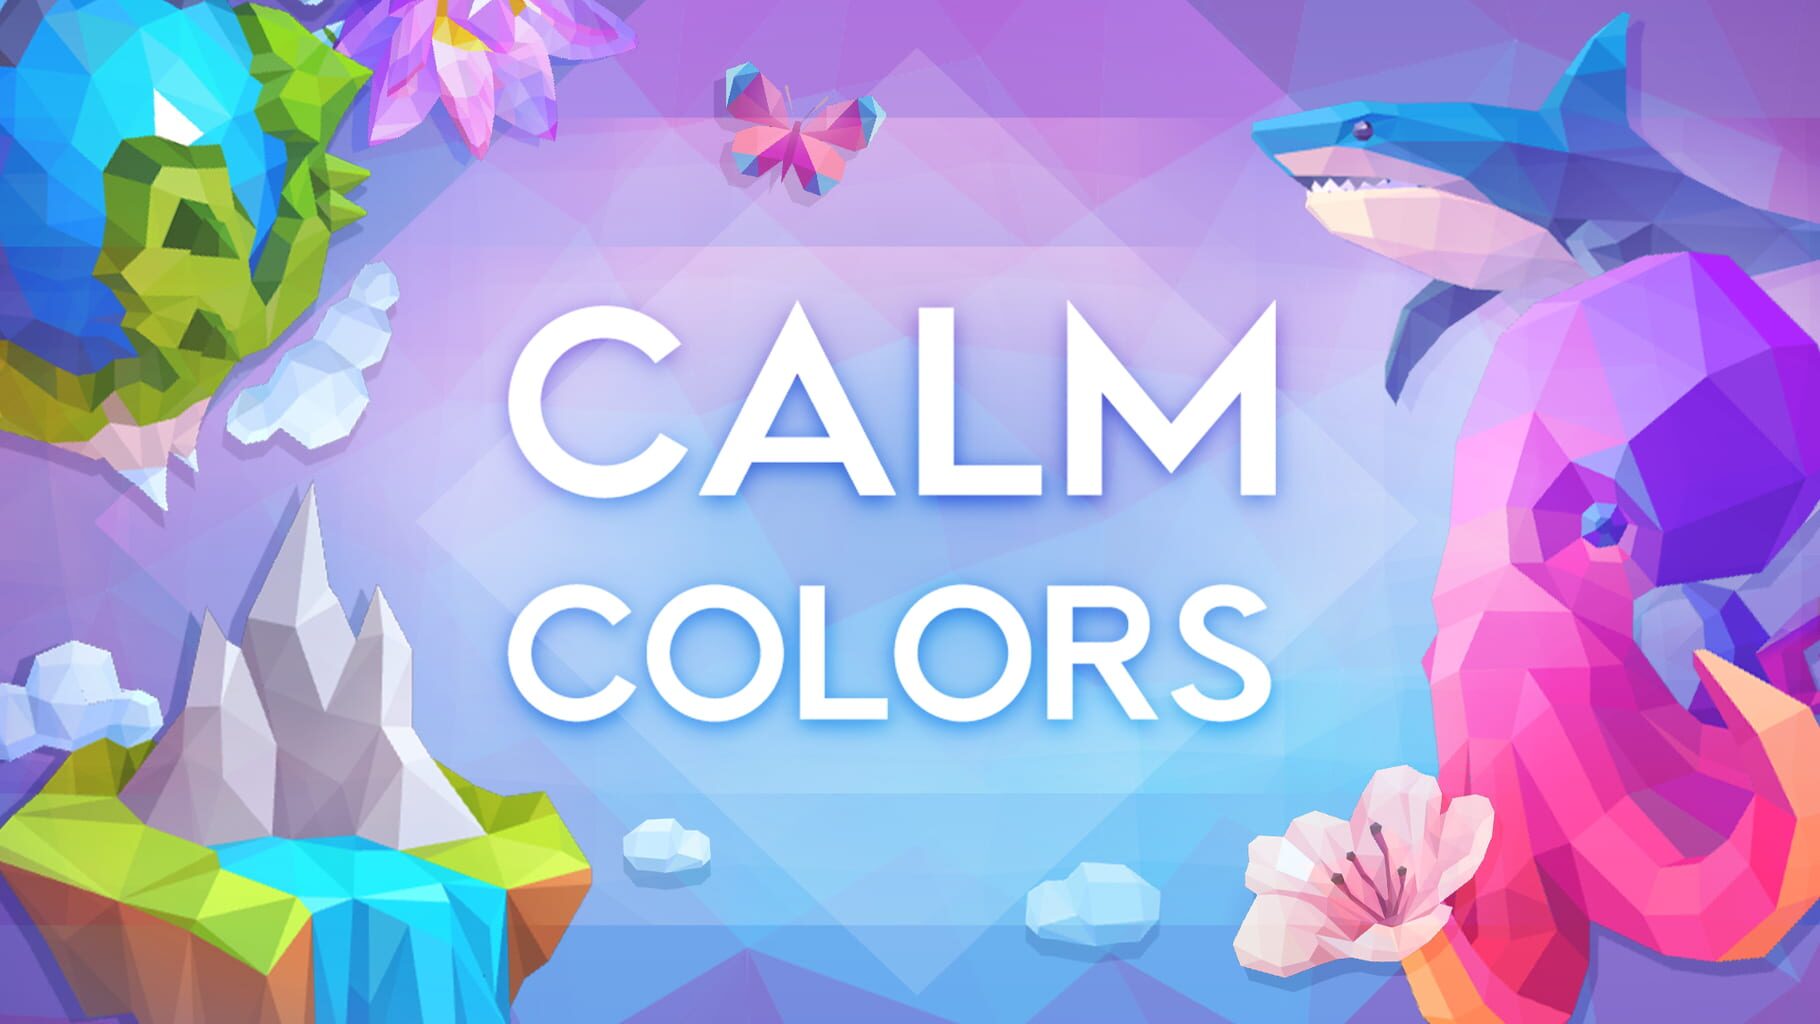 Calm Colors artwork